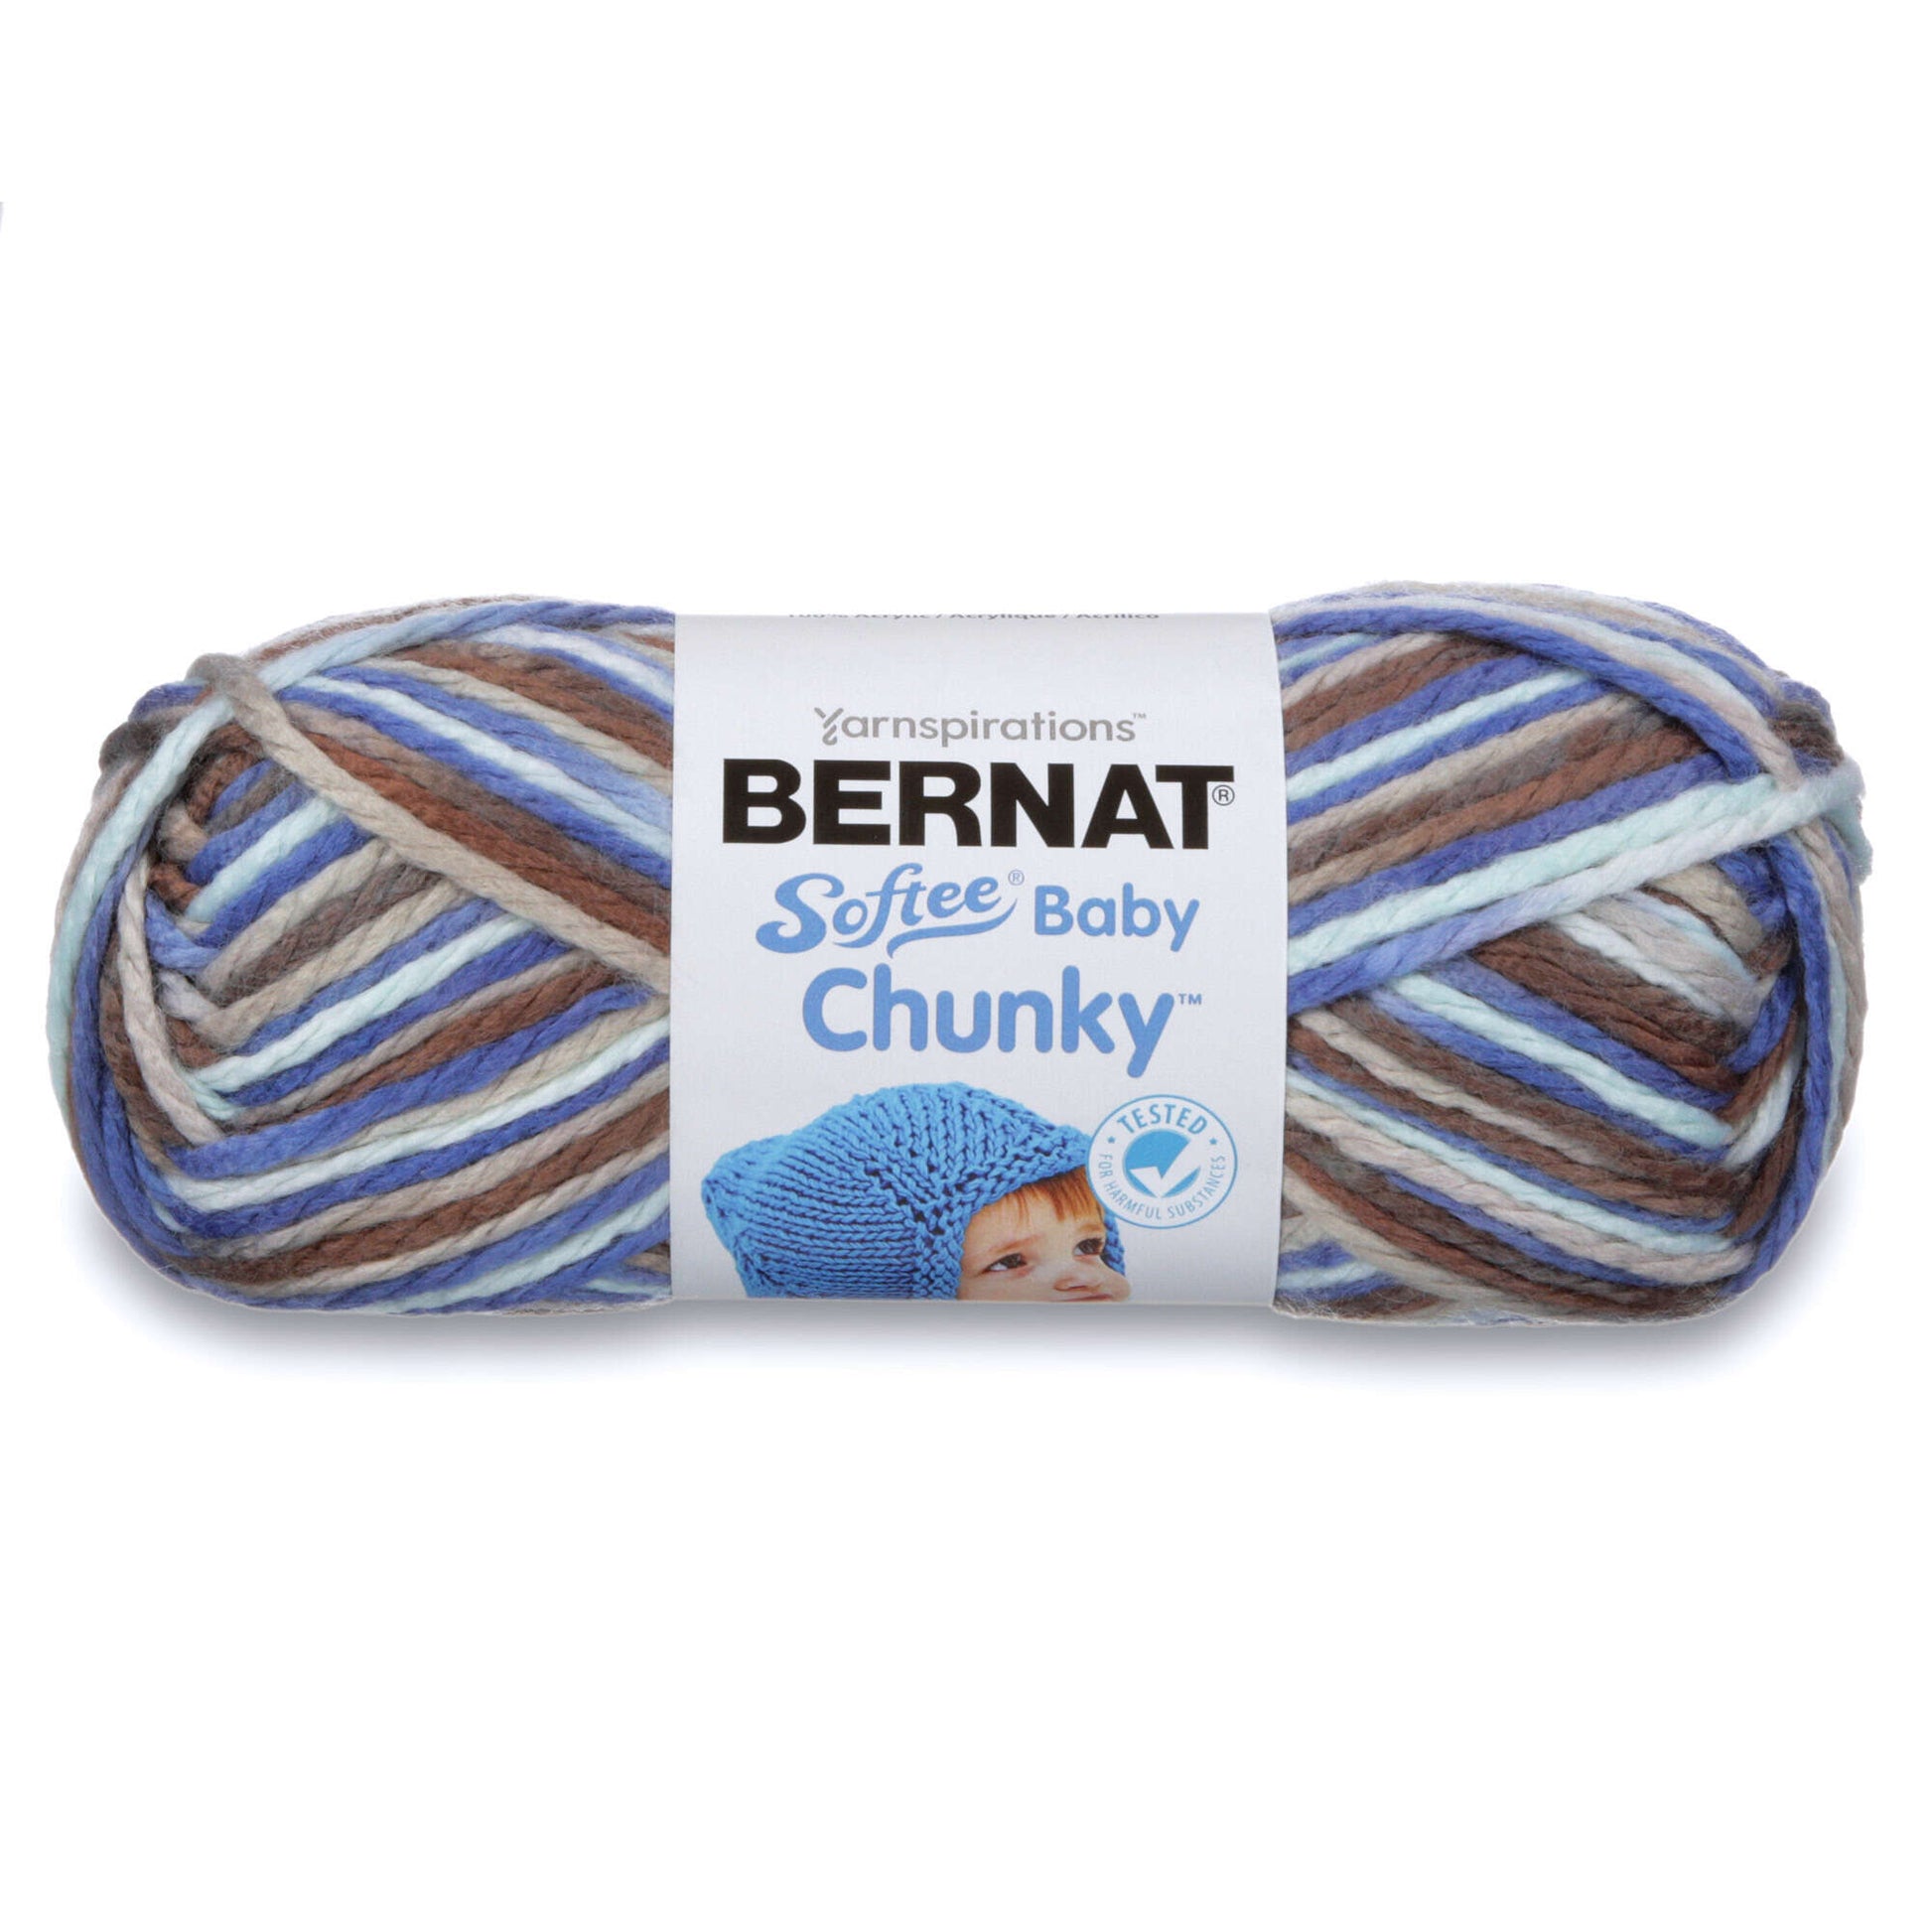 Bernat Softee Baby Chunky Ombres Yarn - Discontinued Shades